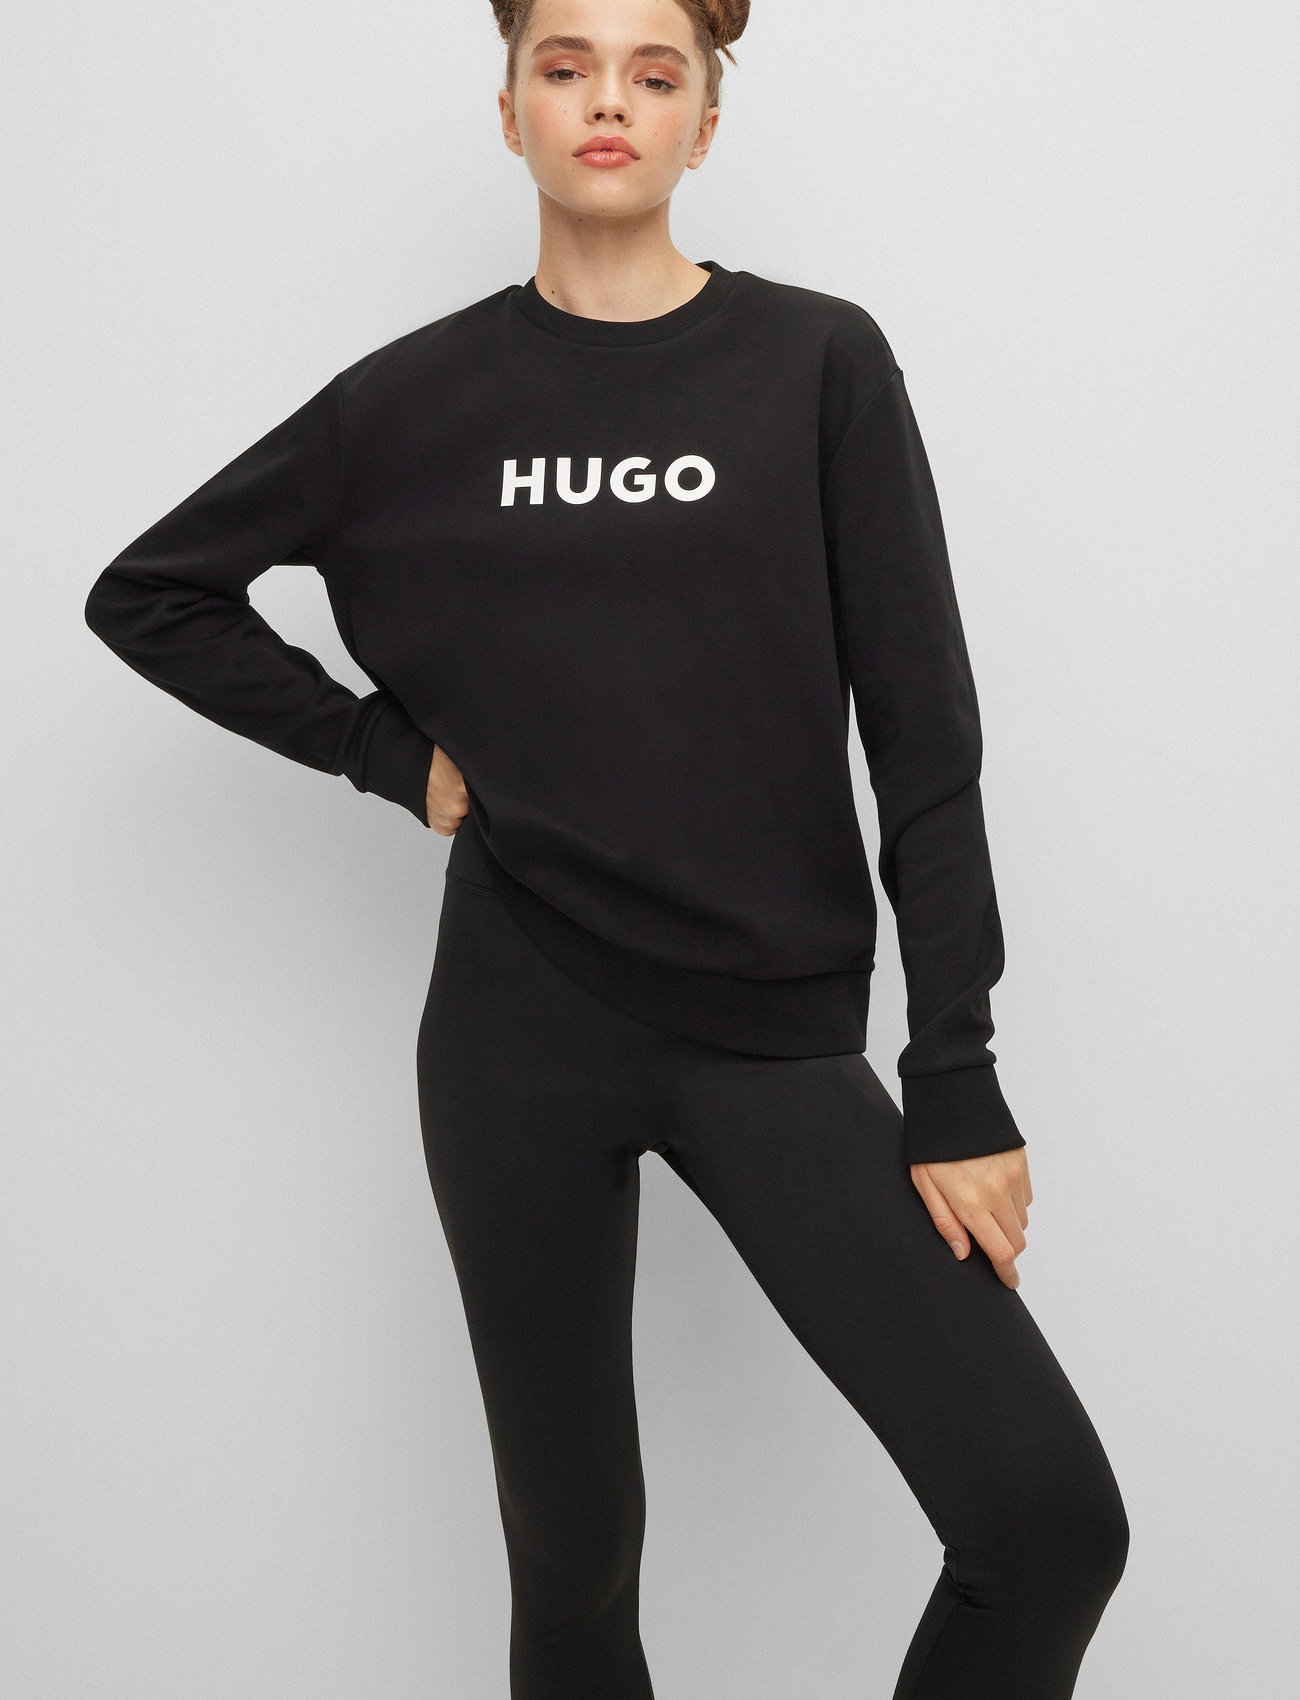 HUGO - The HUGO Sweater - kobiety - black - 1